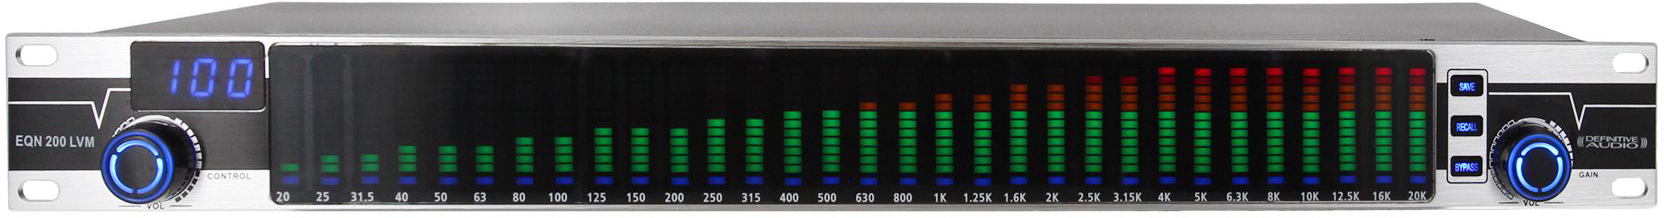 Definitive Audio Eqn 200 Lvm - Equalizer / channel strip - Main picture